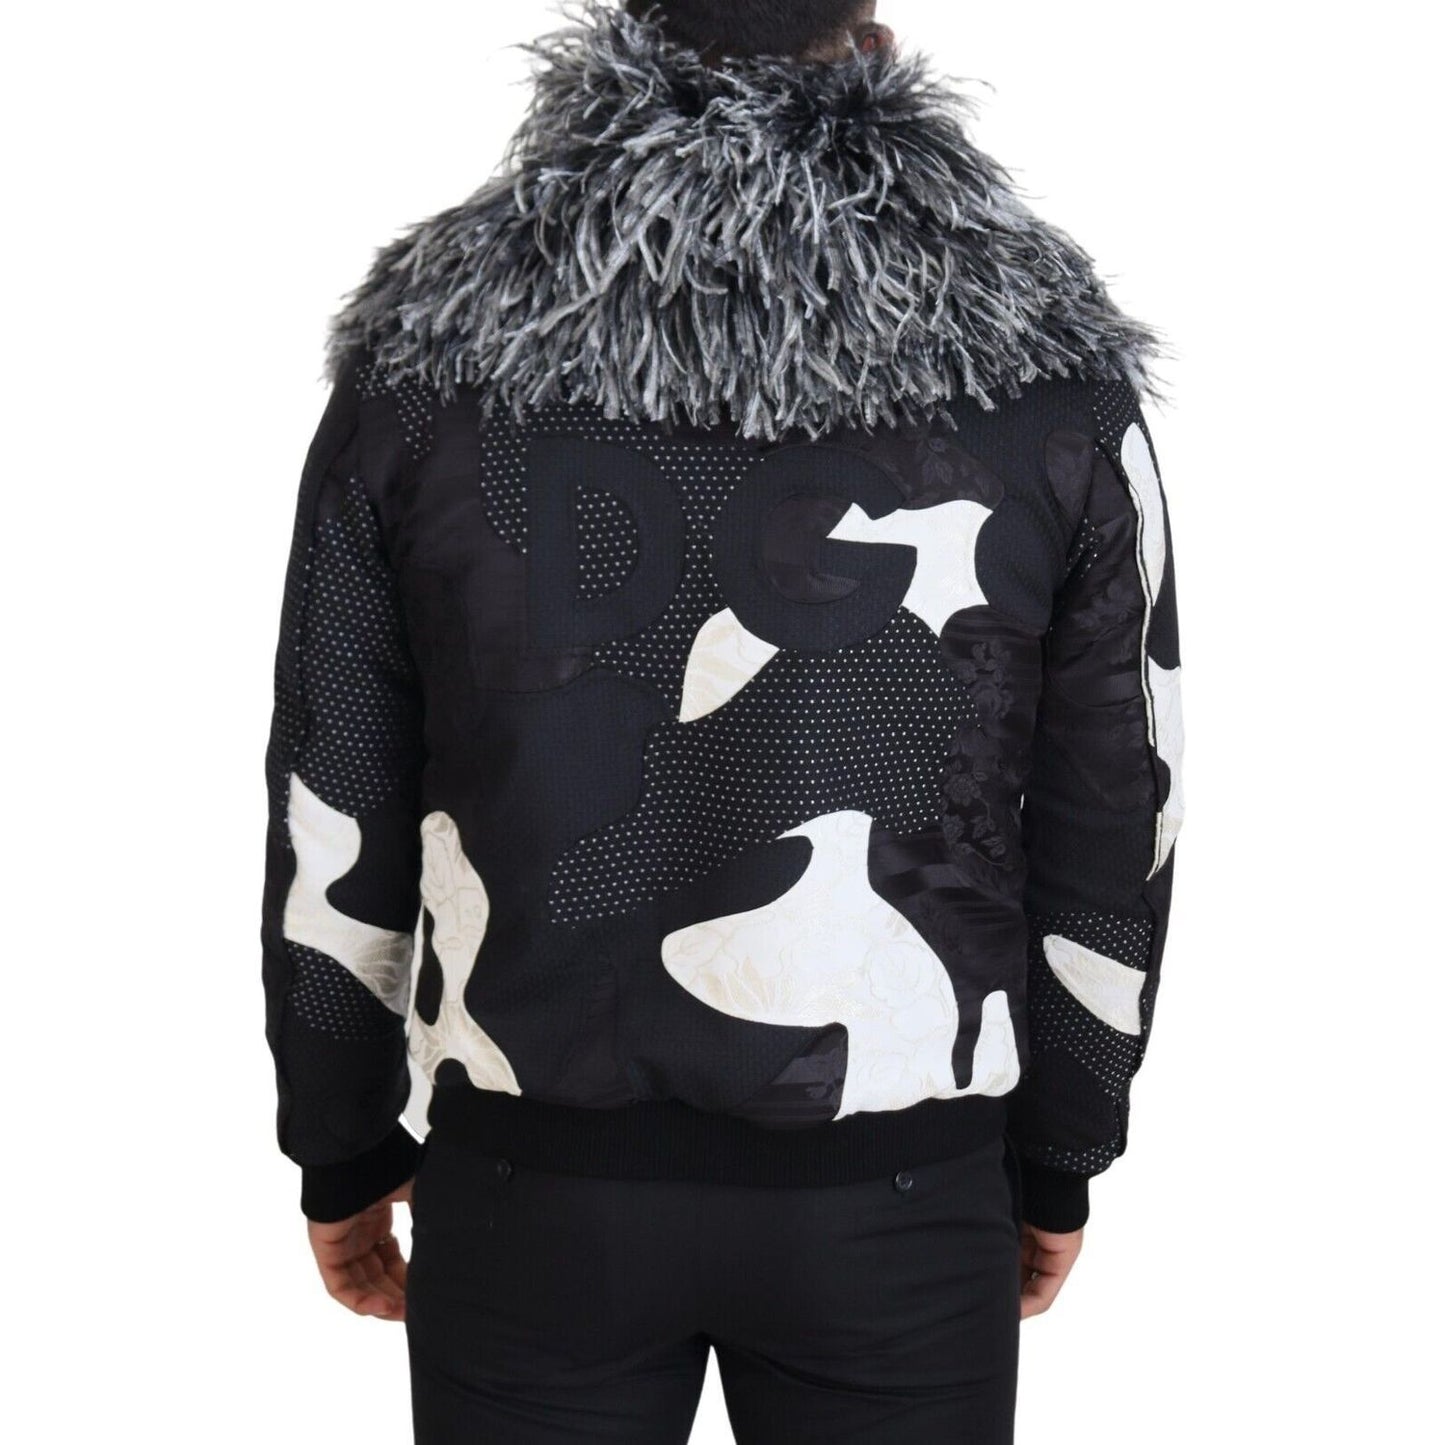 Dolce & Gabbana Elegant Shearling Zip Jacket in Black & White black-white-fur-shearling-full-zip-jacket